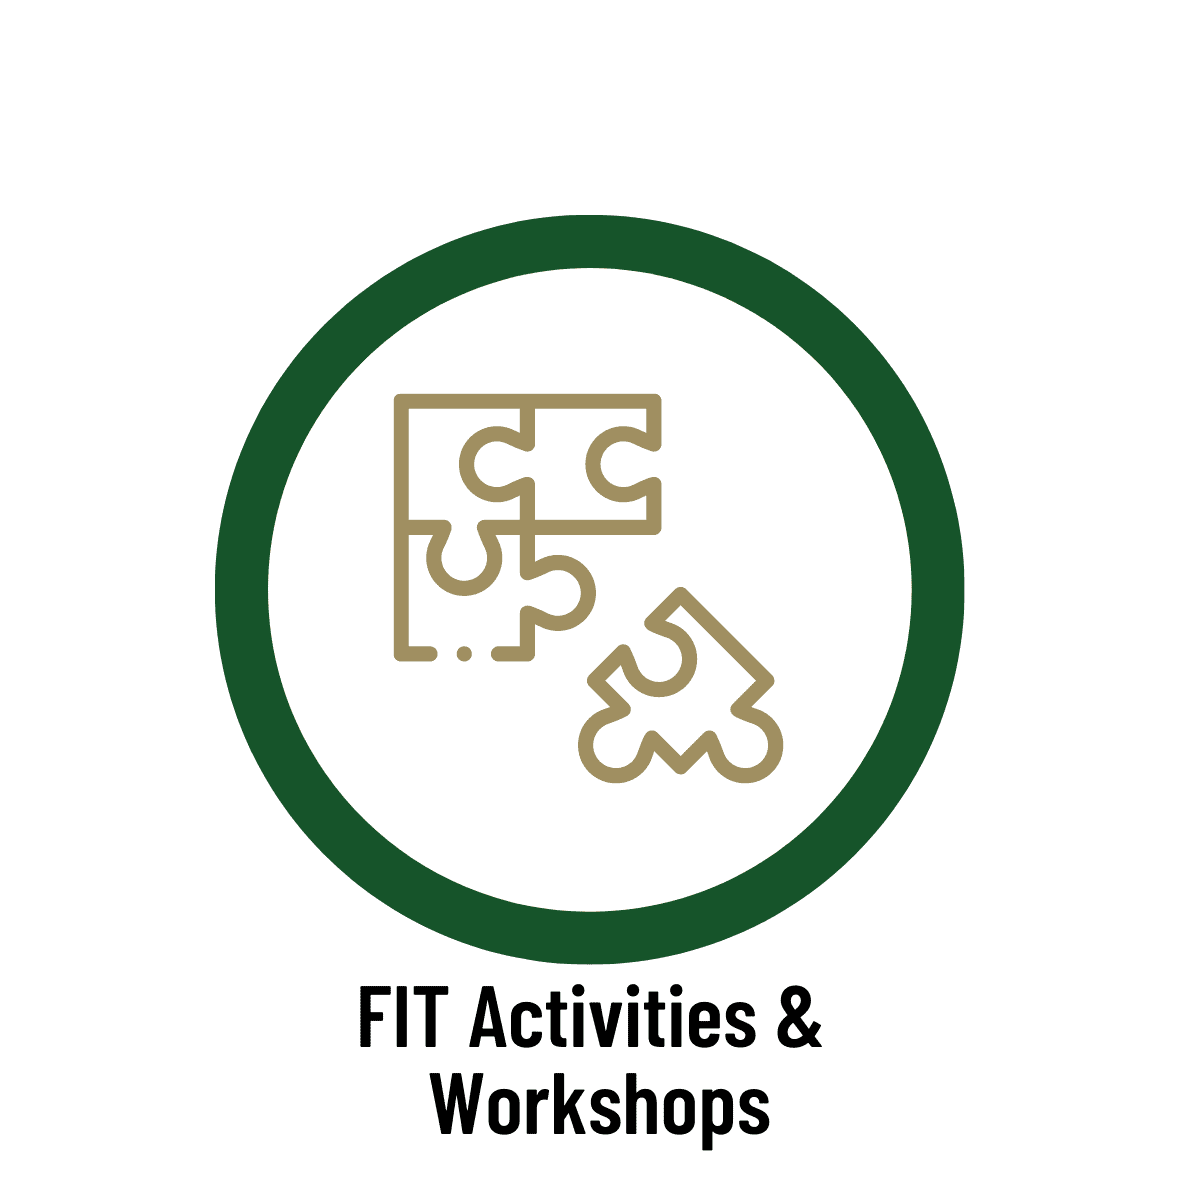 FIT Activities & Workshops